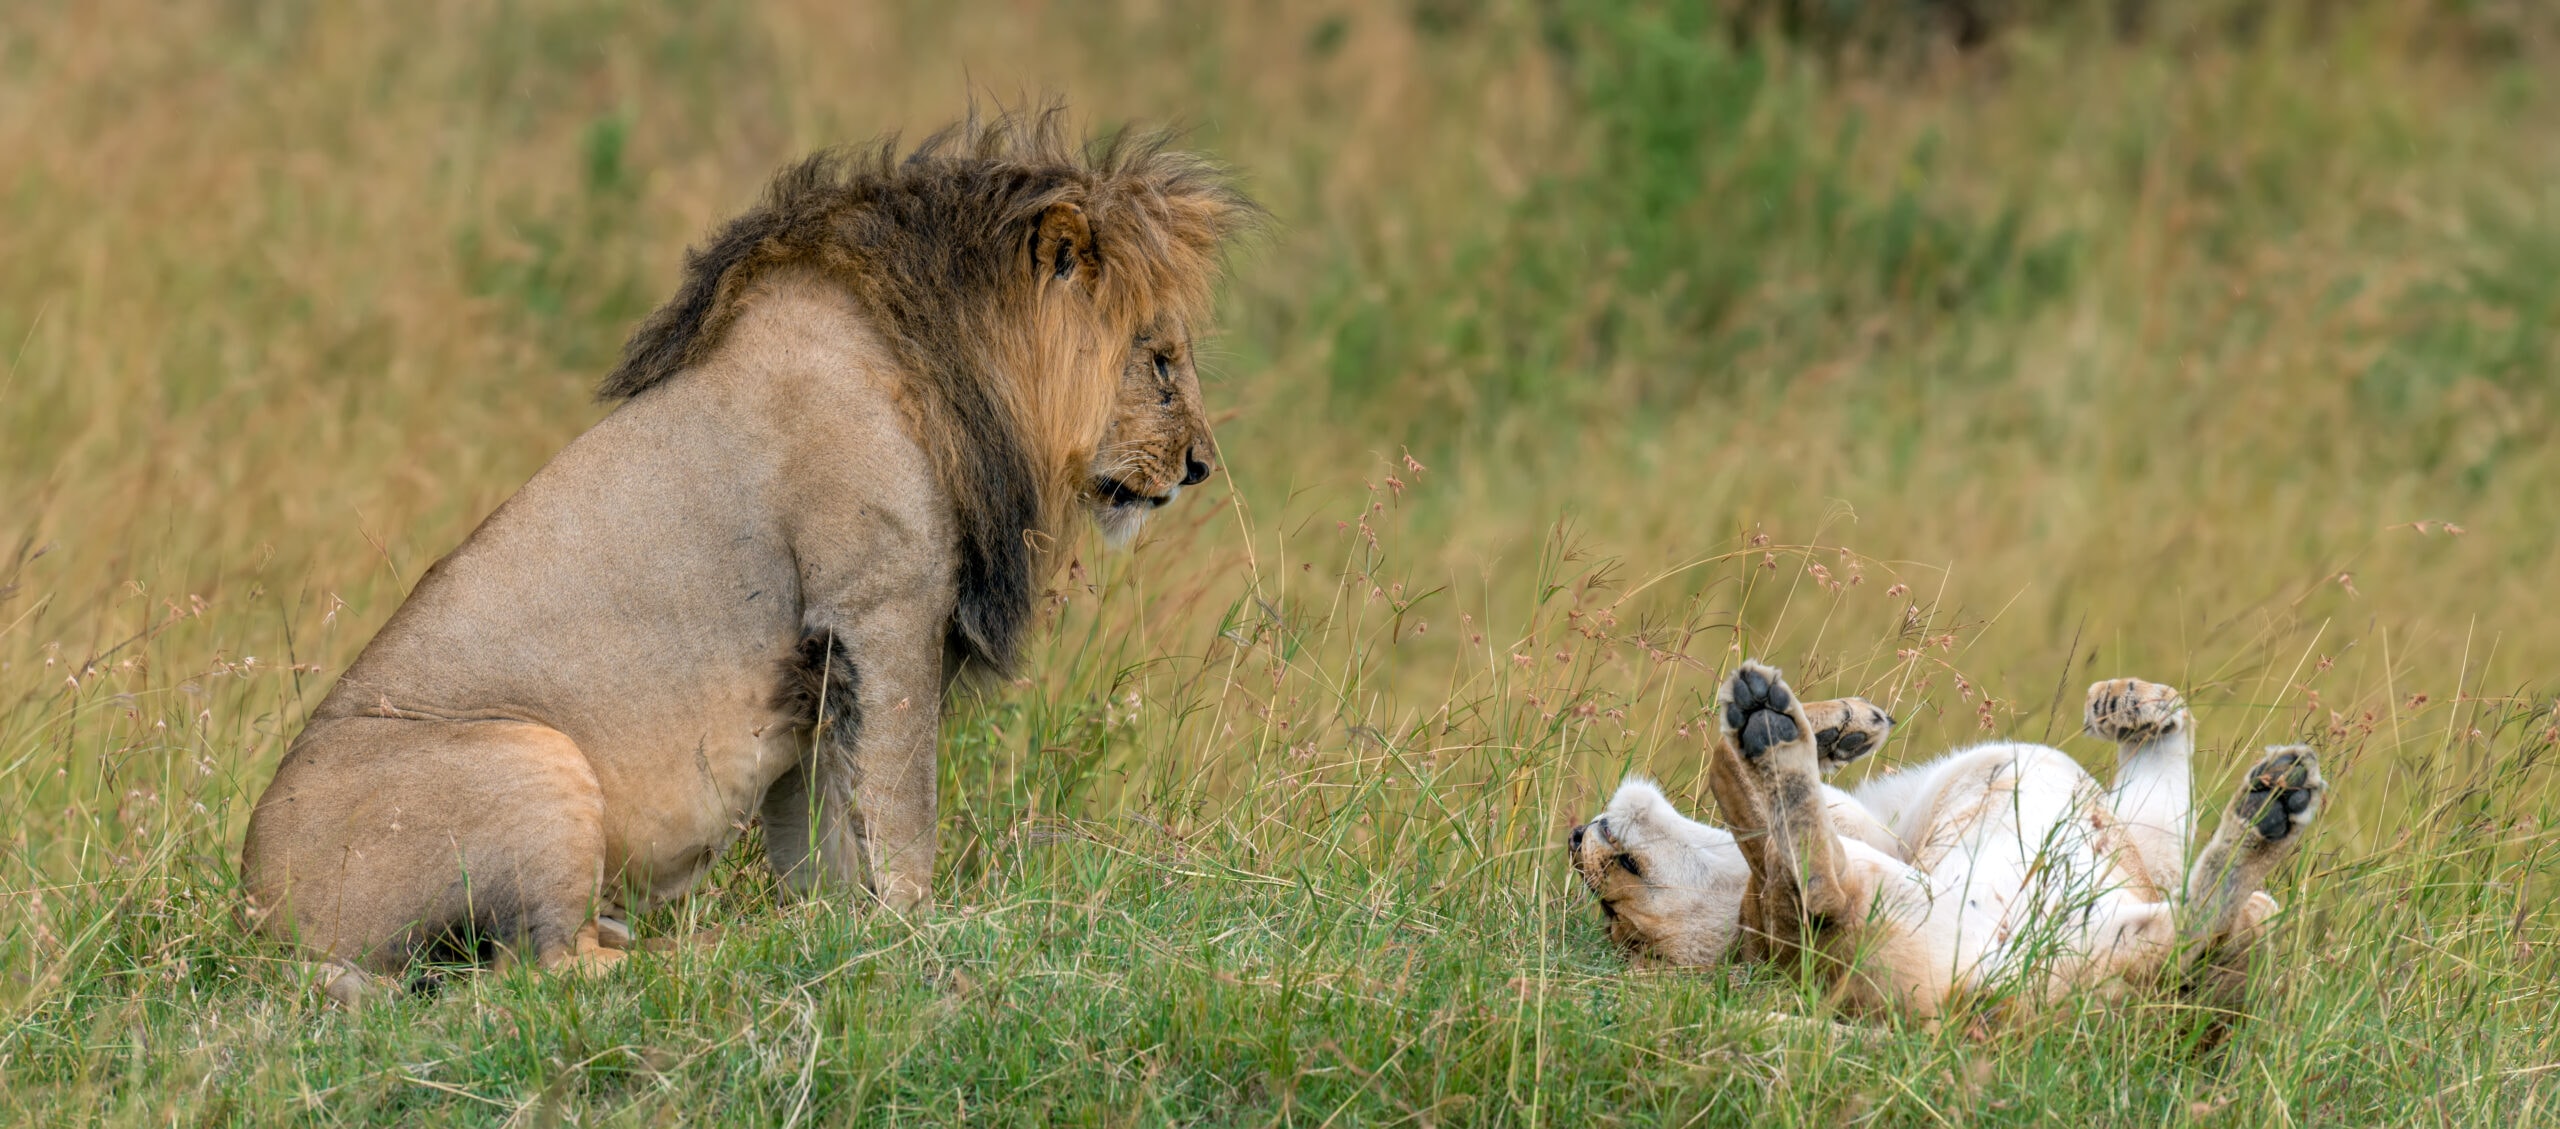 lion in national park of kenya 2021 08 26 15 56 01 utc 1 scaled